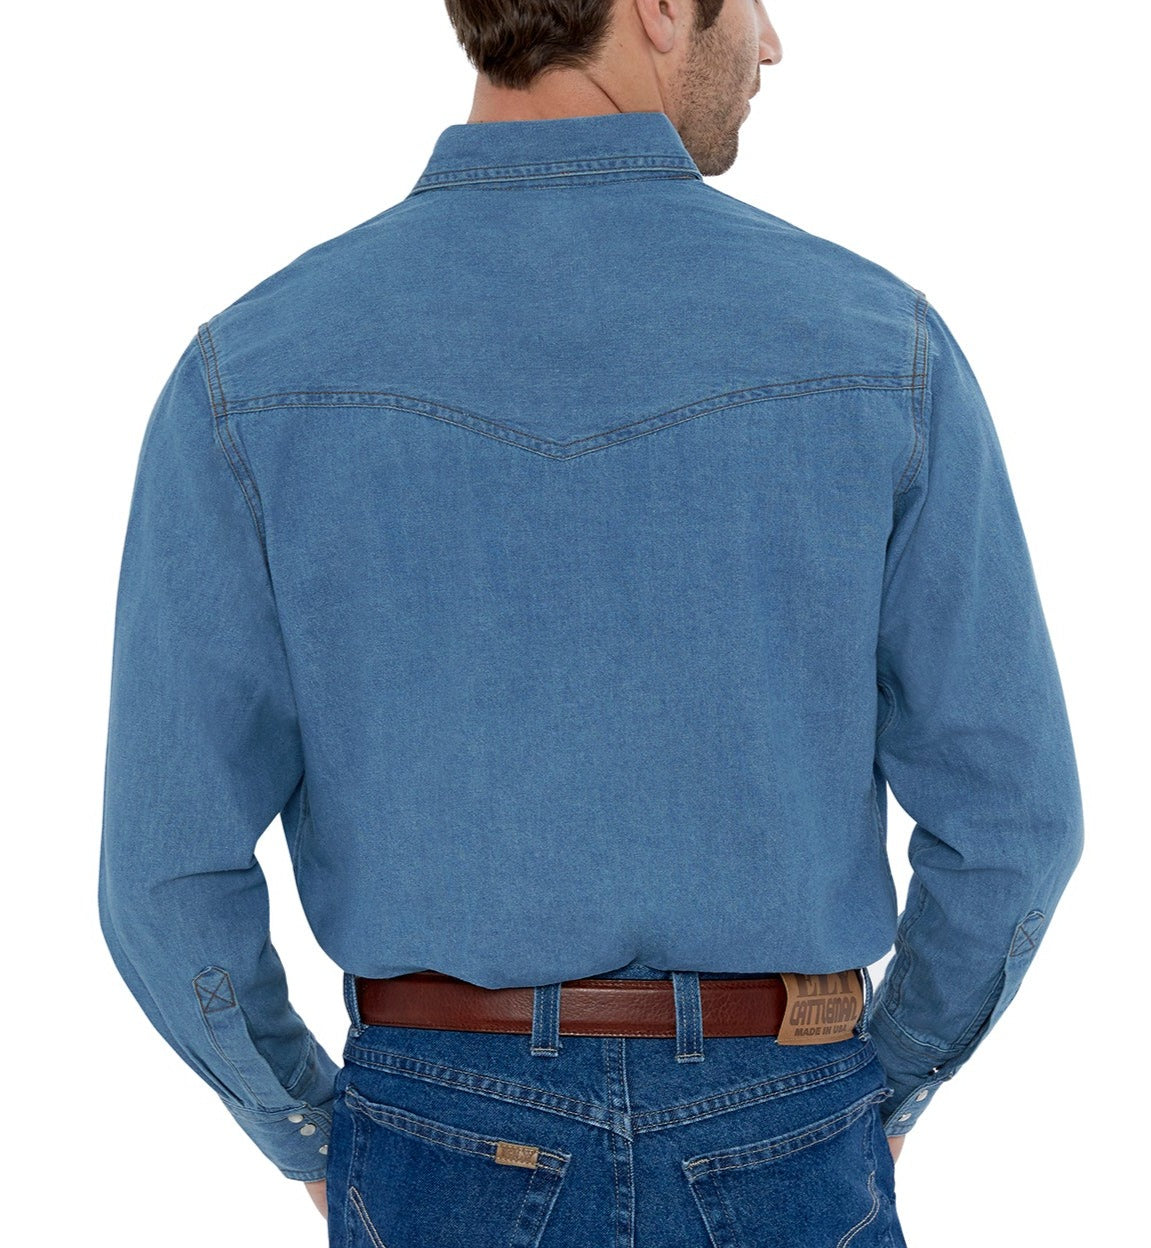 Bottega Veneta® Men's Medium Washed Denim Shirt in Original medium wash  indigo. Shop online now.